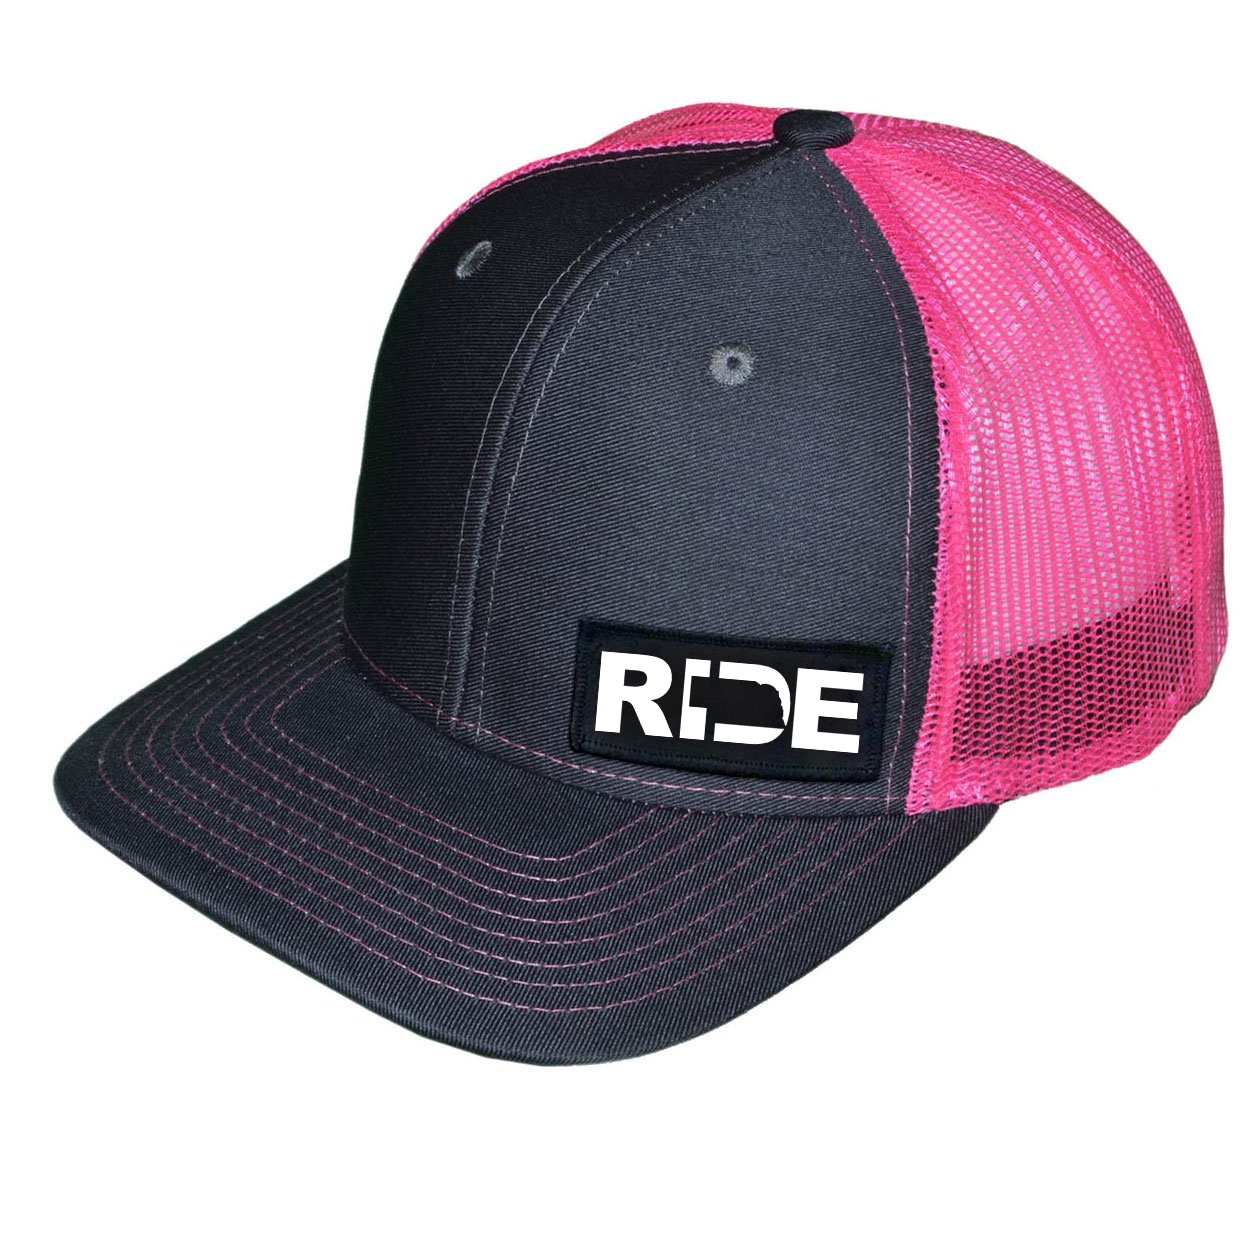 Ride Nebraska Night Out Woven Patch Snapback Trucker Hat Charcoal/Neon Pink (White Logo)